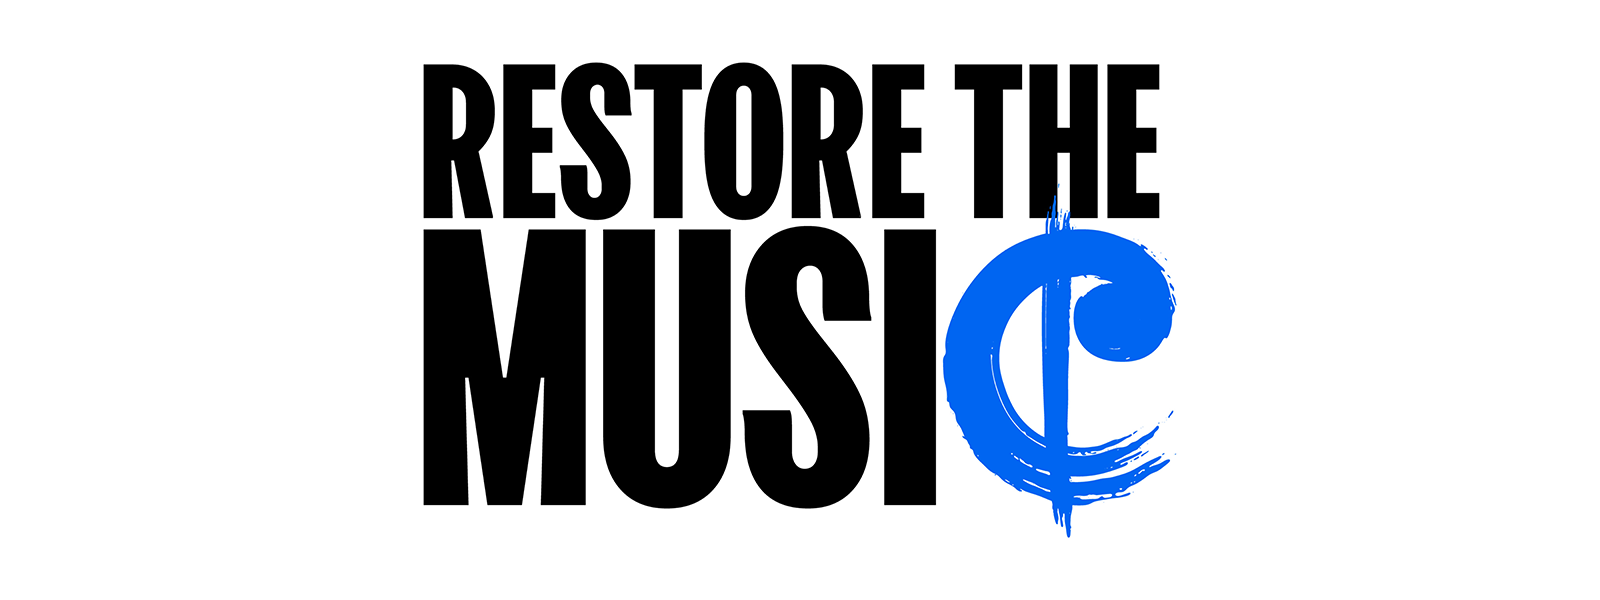 Restore The Music logo